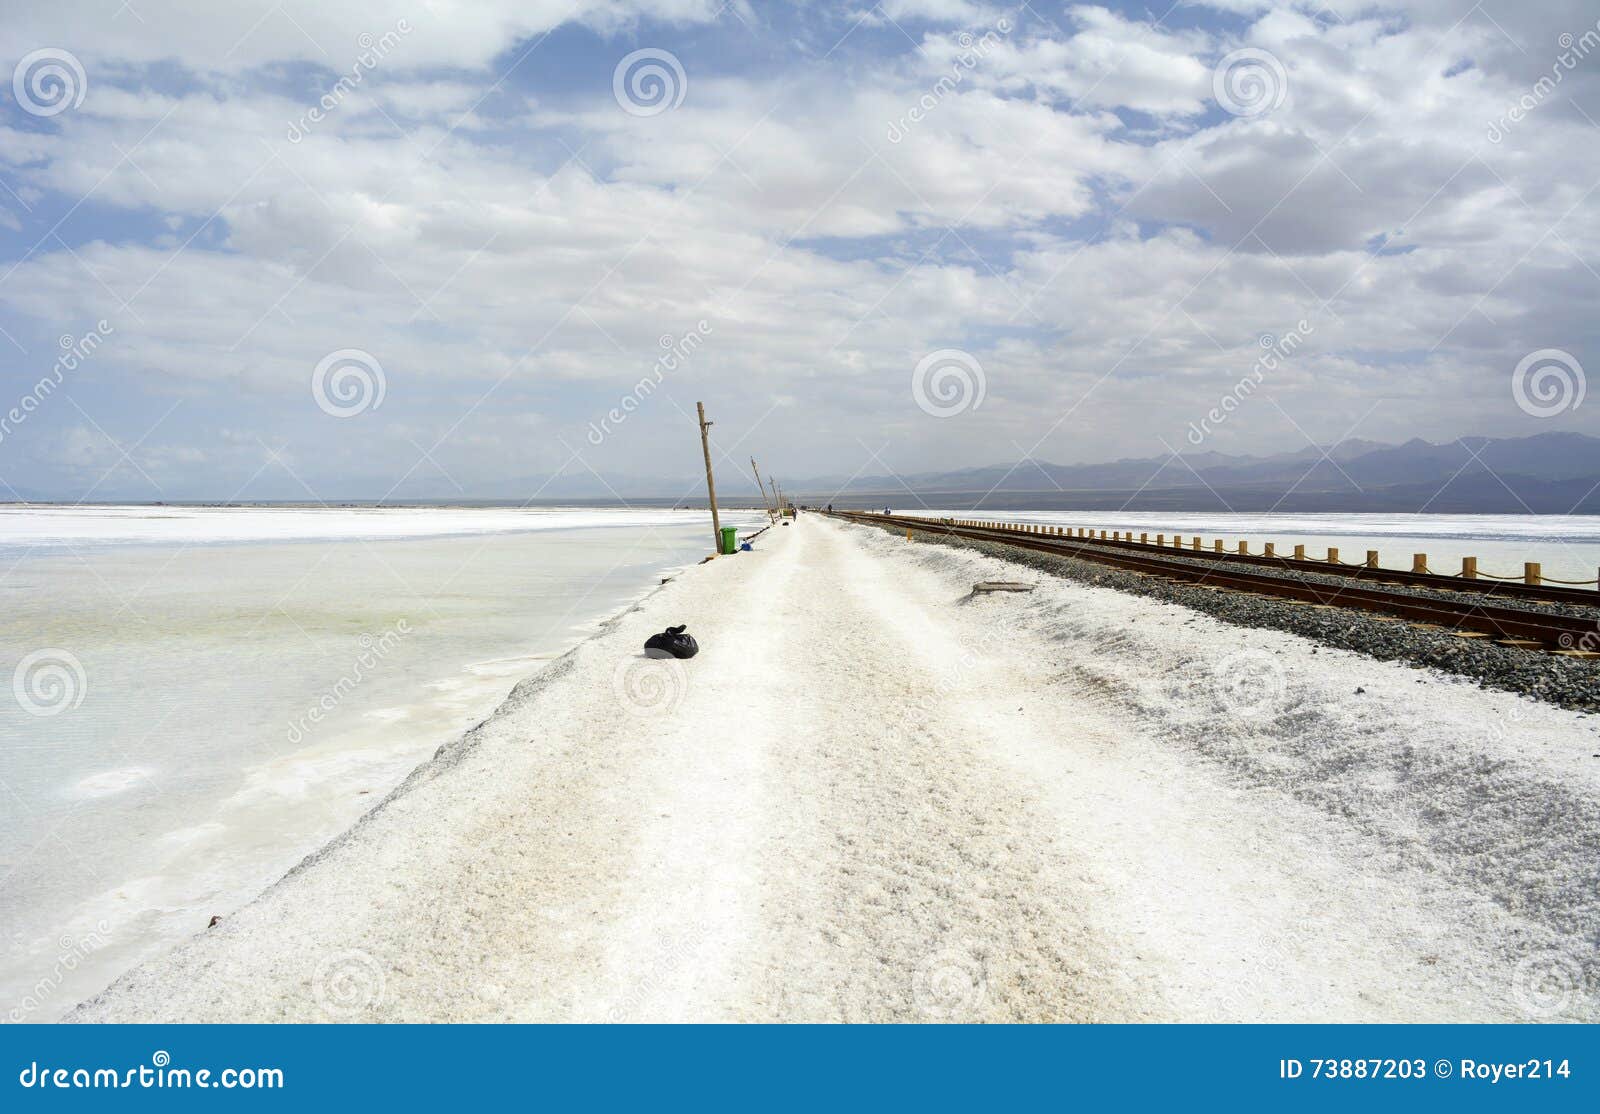 view of chaka salt lake